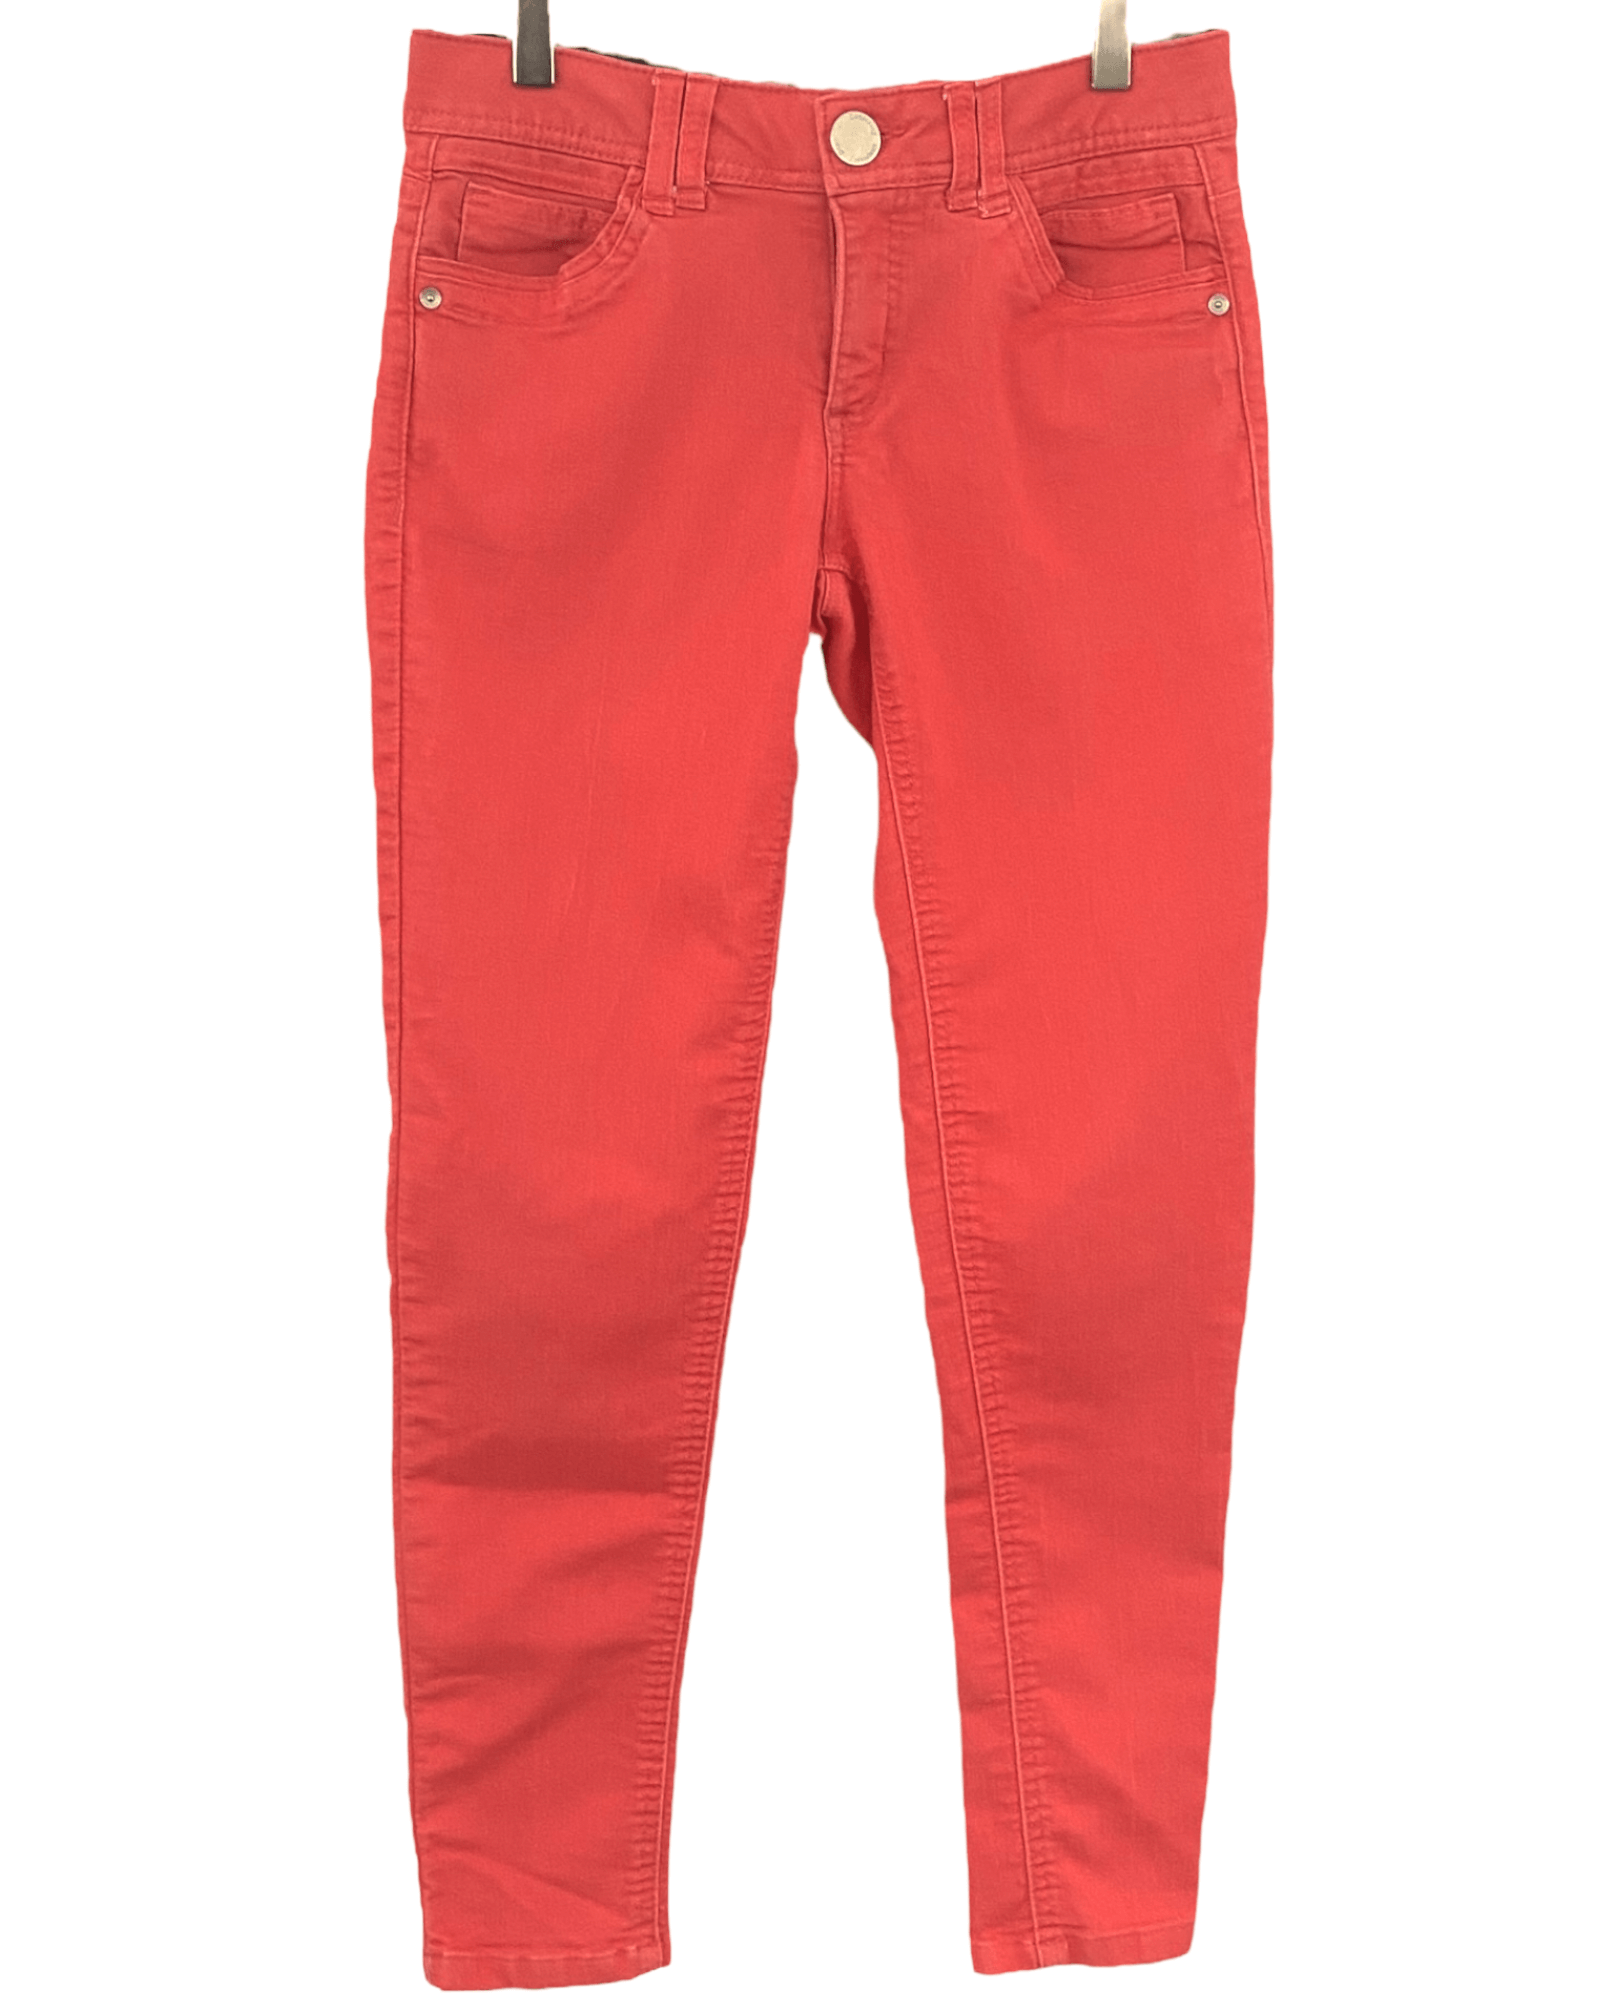 Light Spring DEMOCRACY lantana orange ab technology jeans